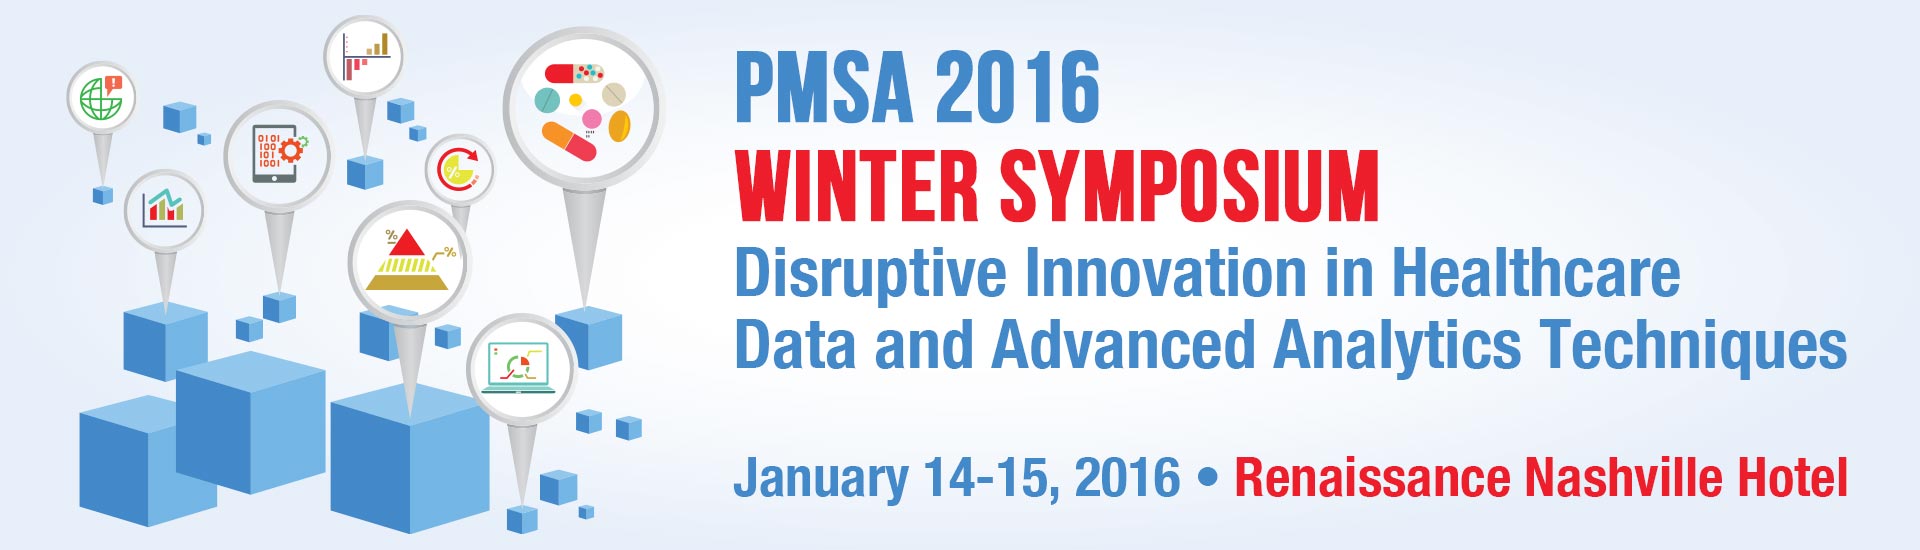 2016 Winter Symposium • Nashville, Tennessee • January 14-15